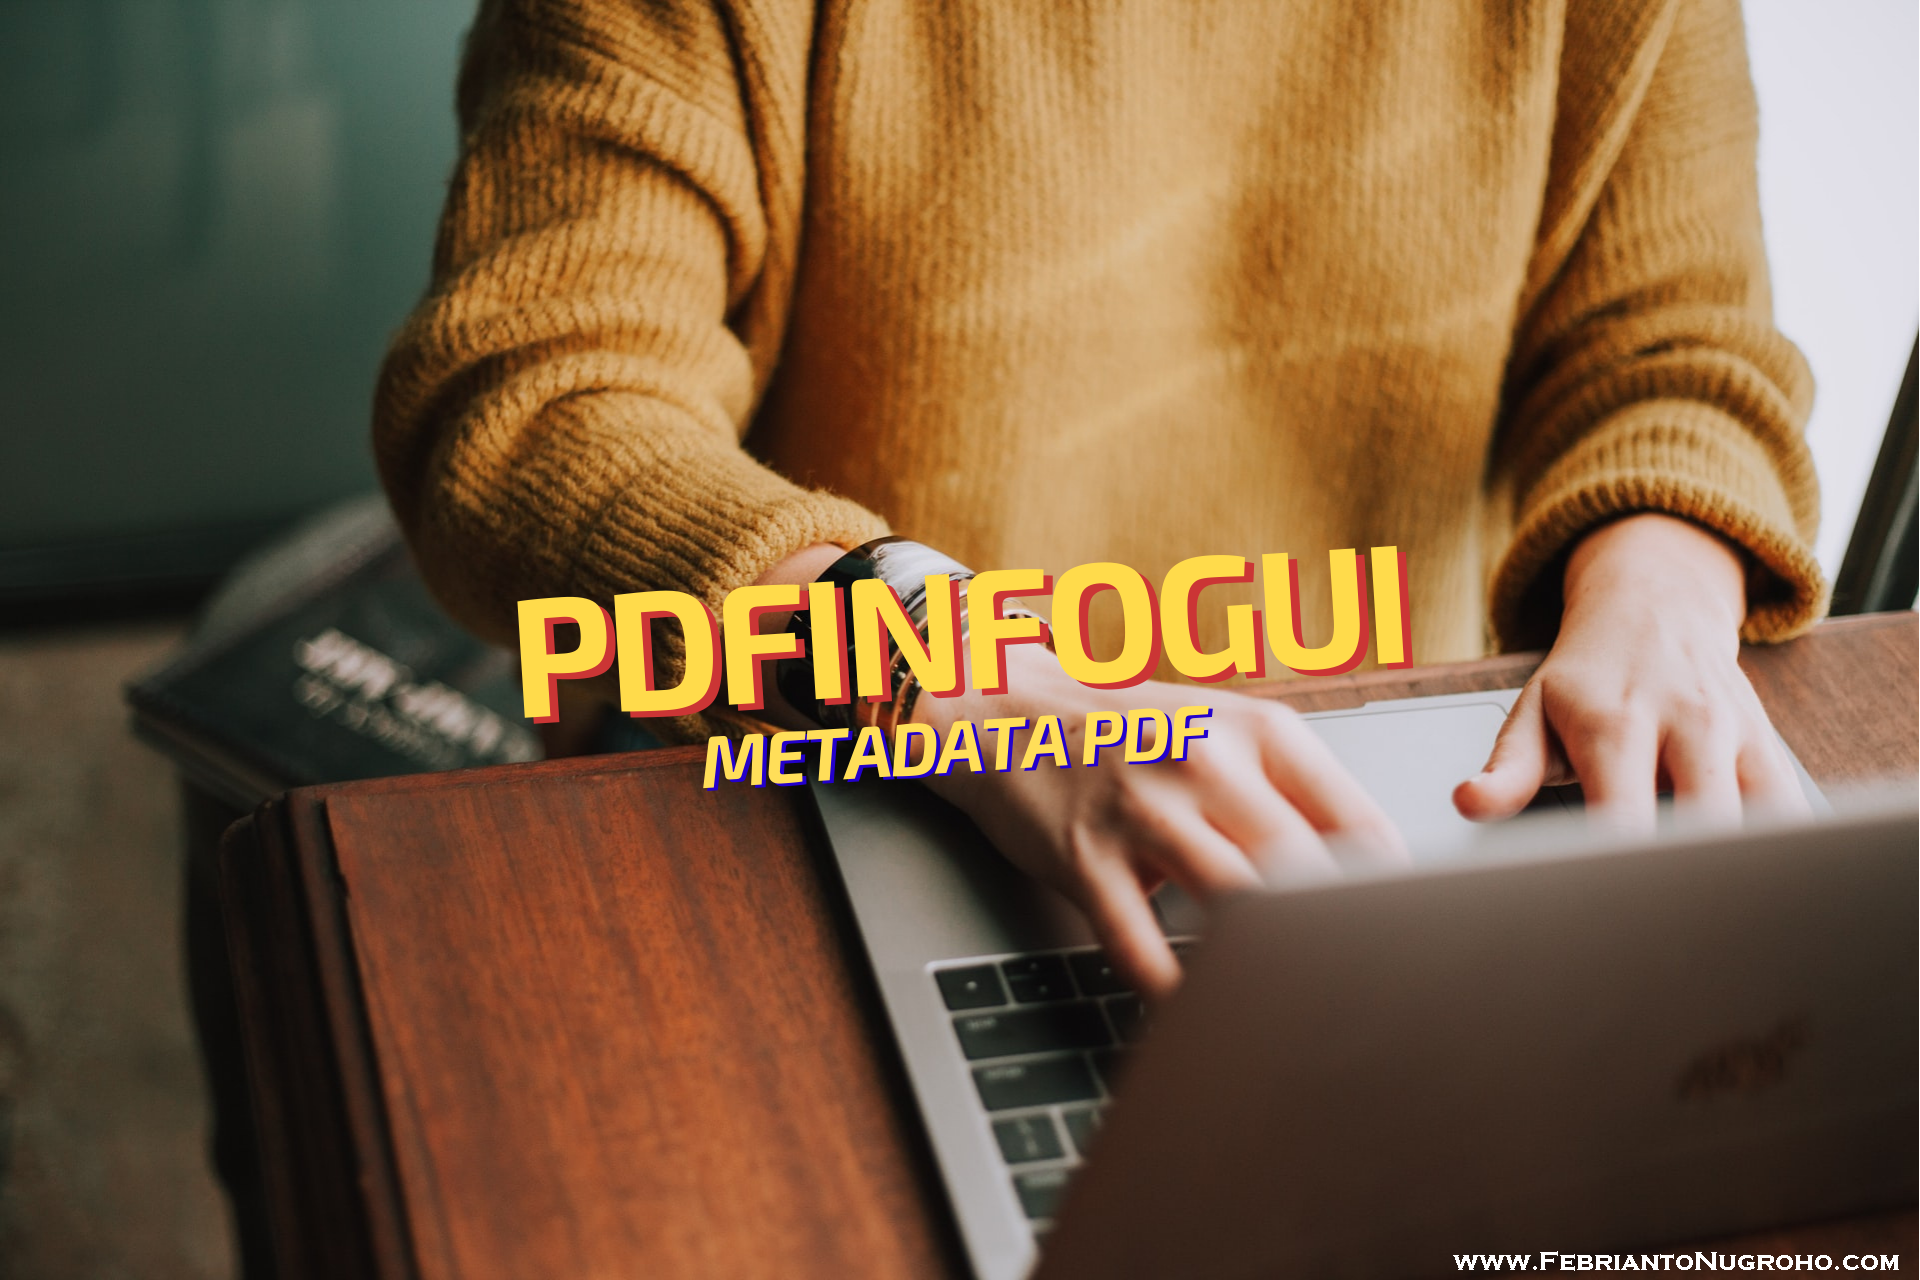 Mengetahui Metadata PDF Menggunakan PDFInfoGUI